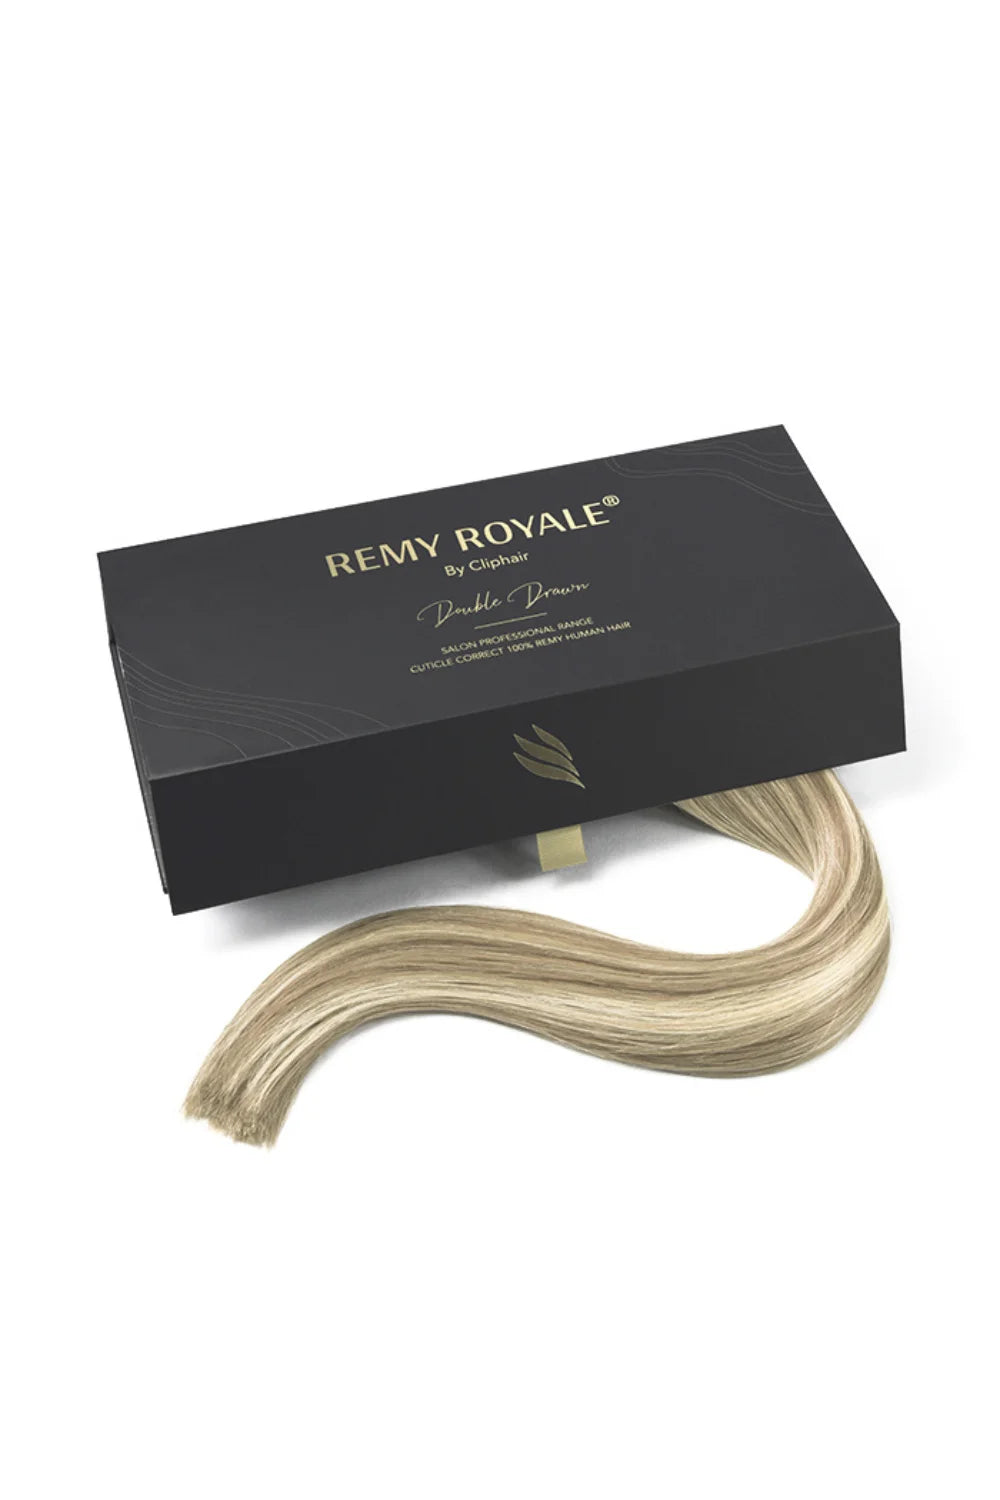 #8/60 remy royale nano ring hair extensions box